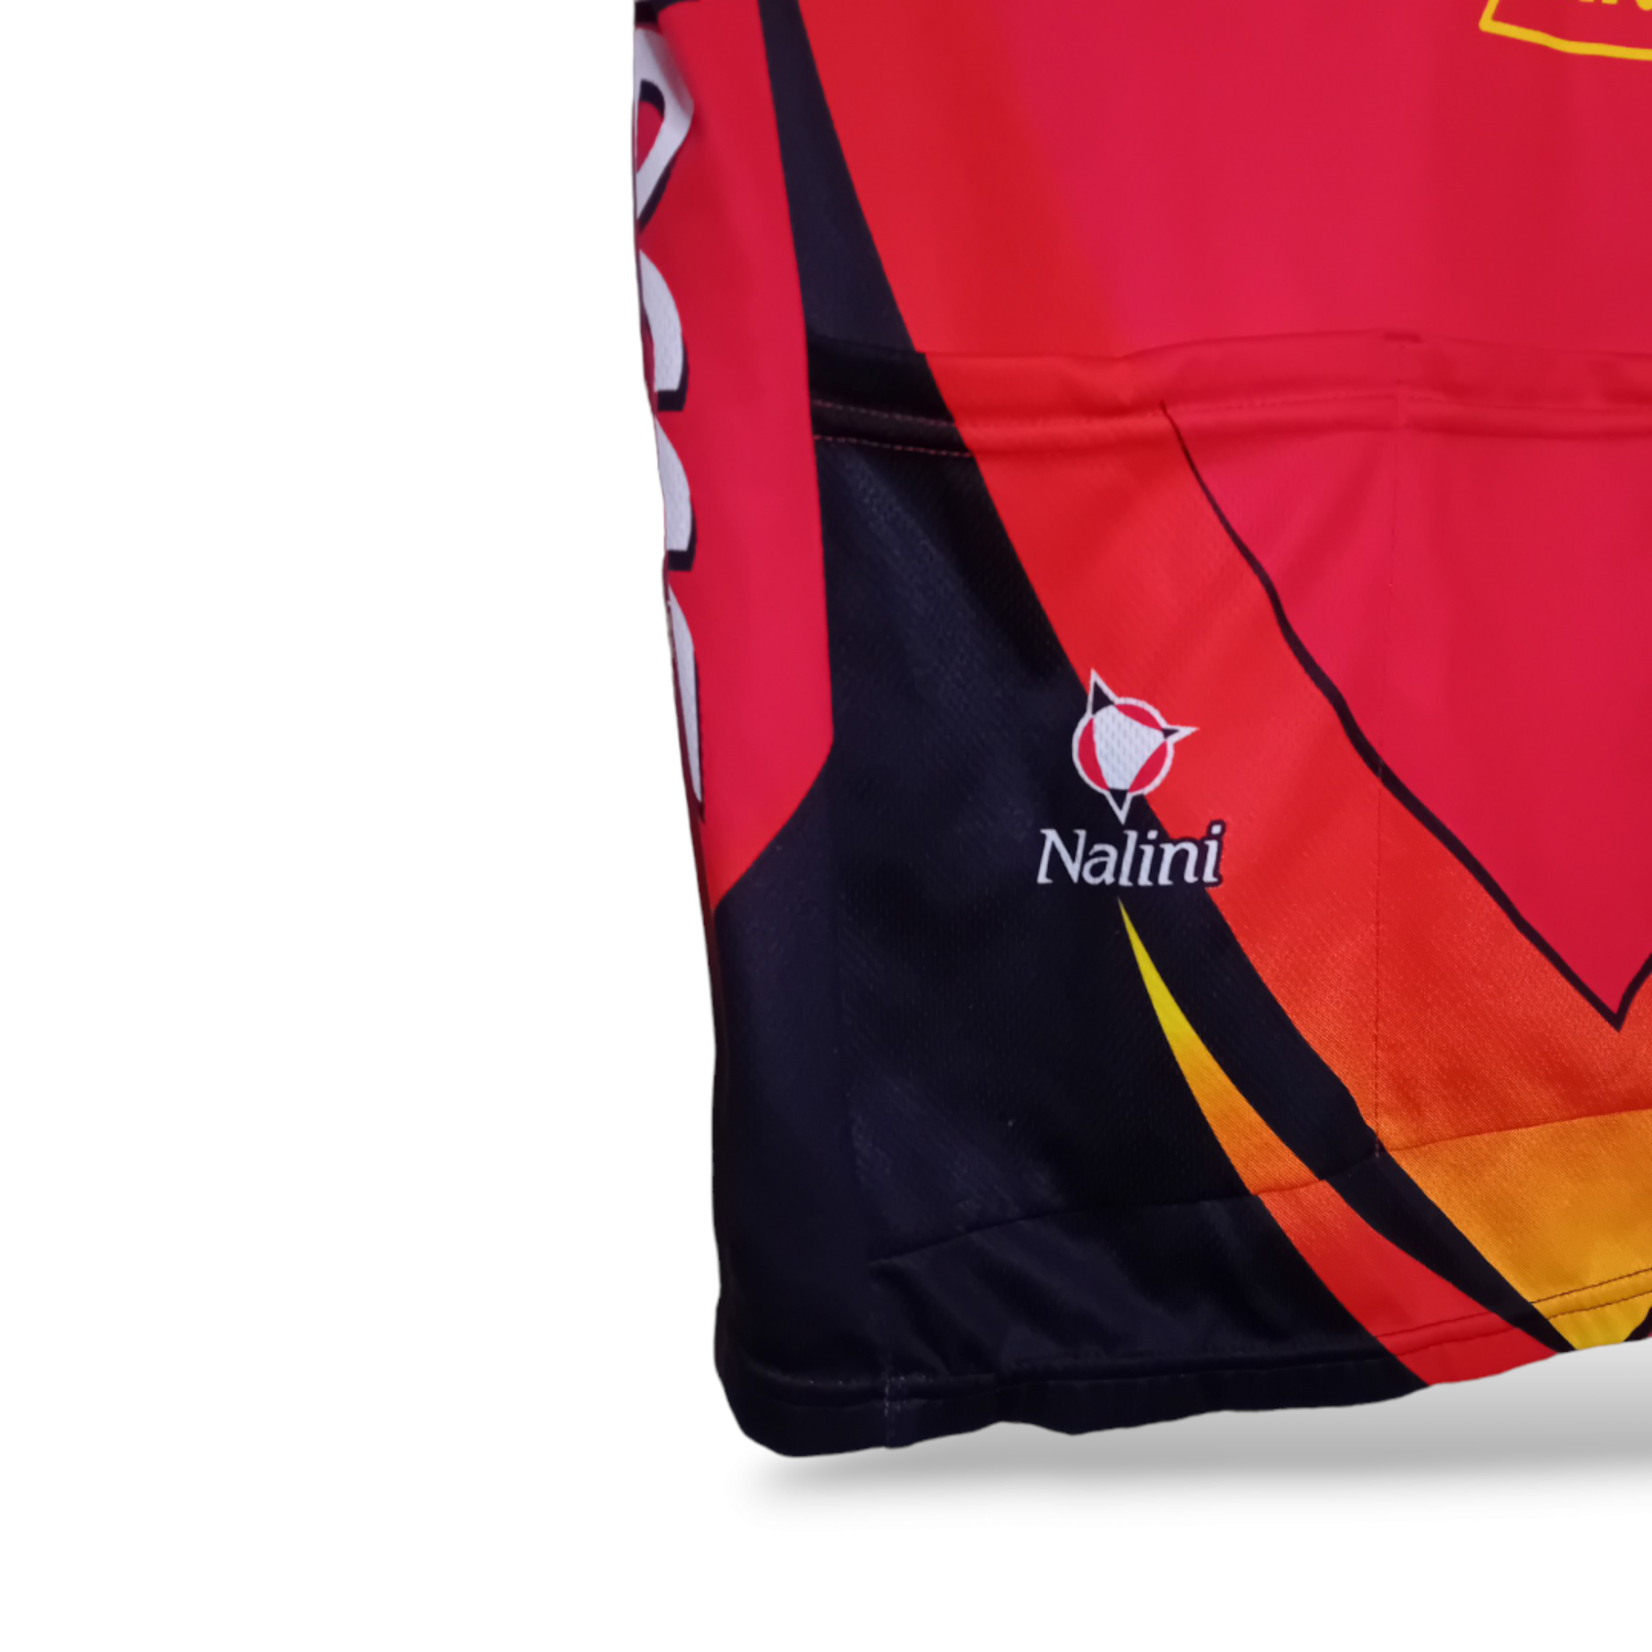 Nalini Origineel Nalini vintage wielershirt Lotto-Adecco 2001